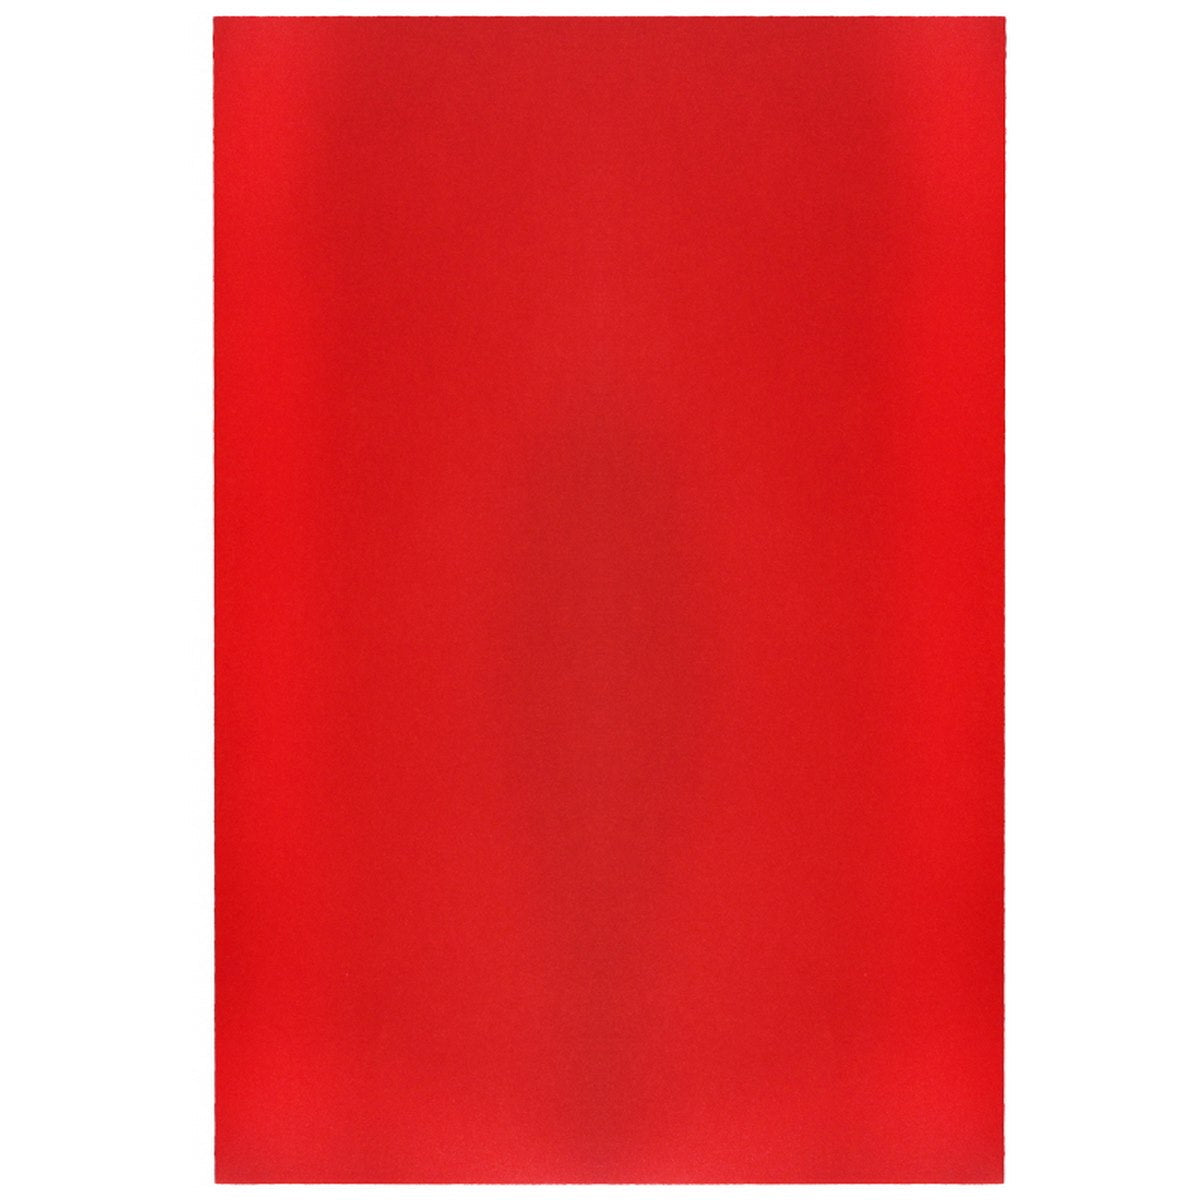 jags-mumbai origami sheet Wellam Paper Plain A4 Red 100gsm